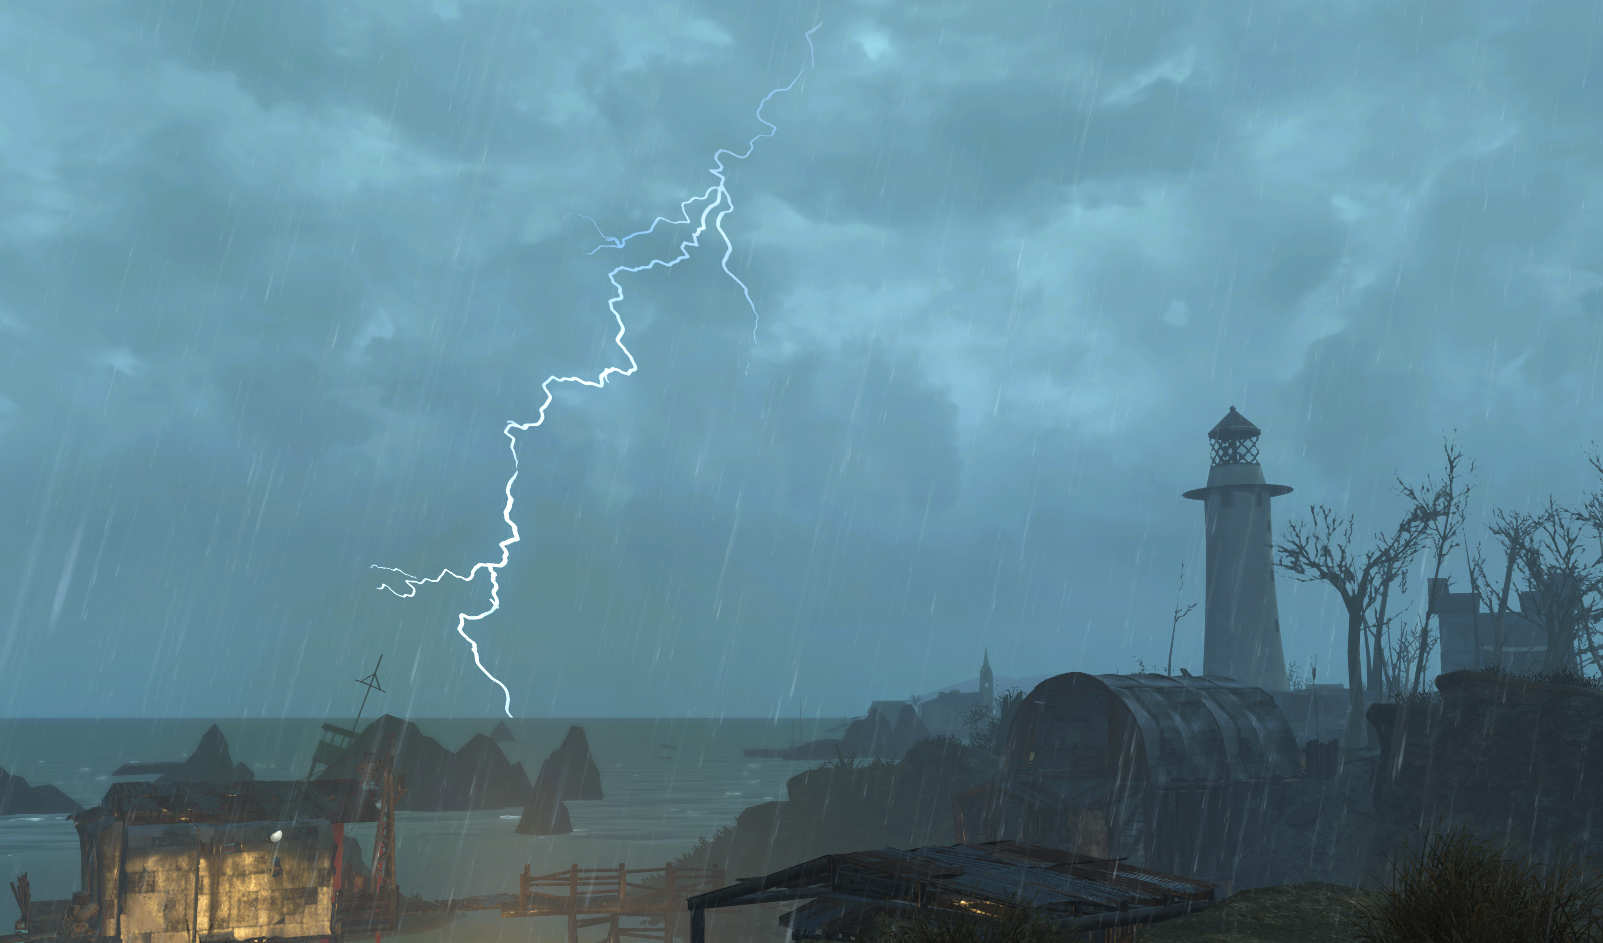 True storms для fallout 4 фото 19